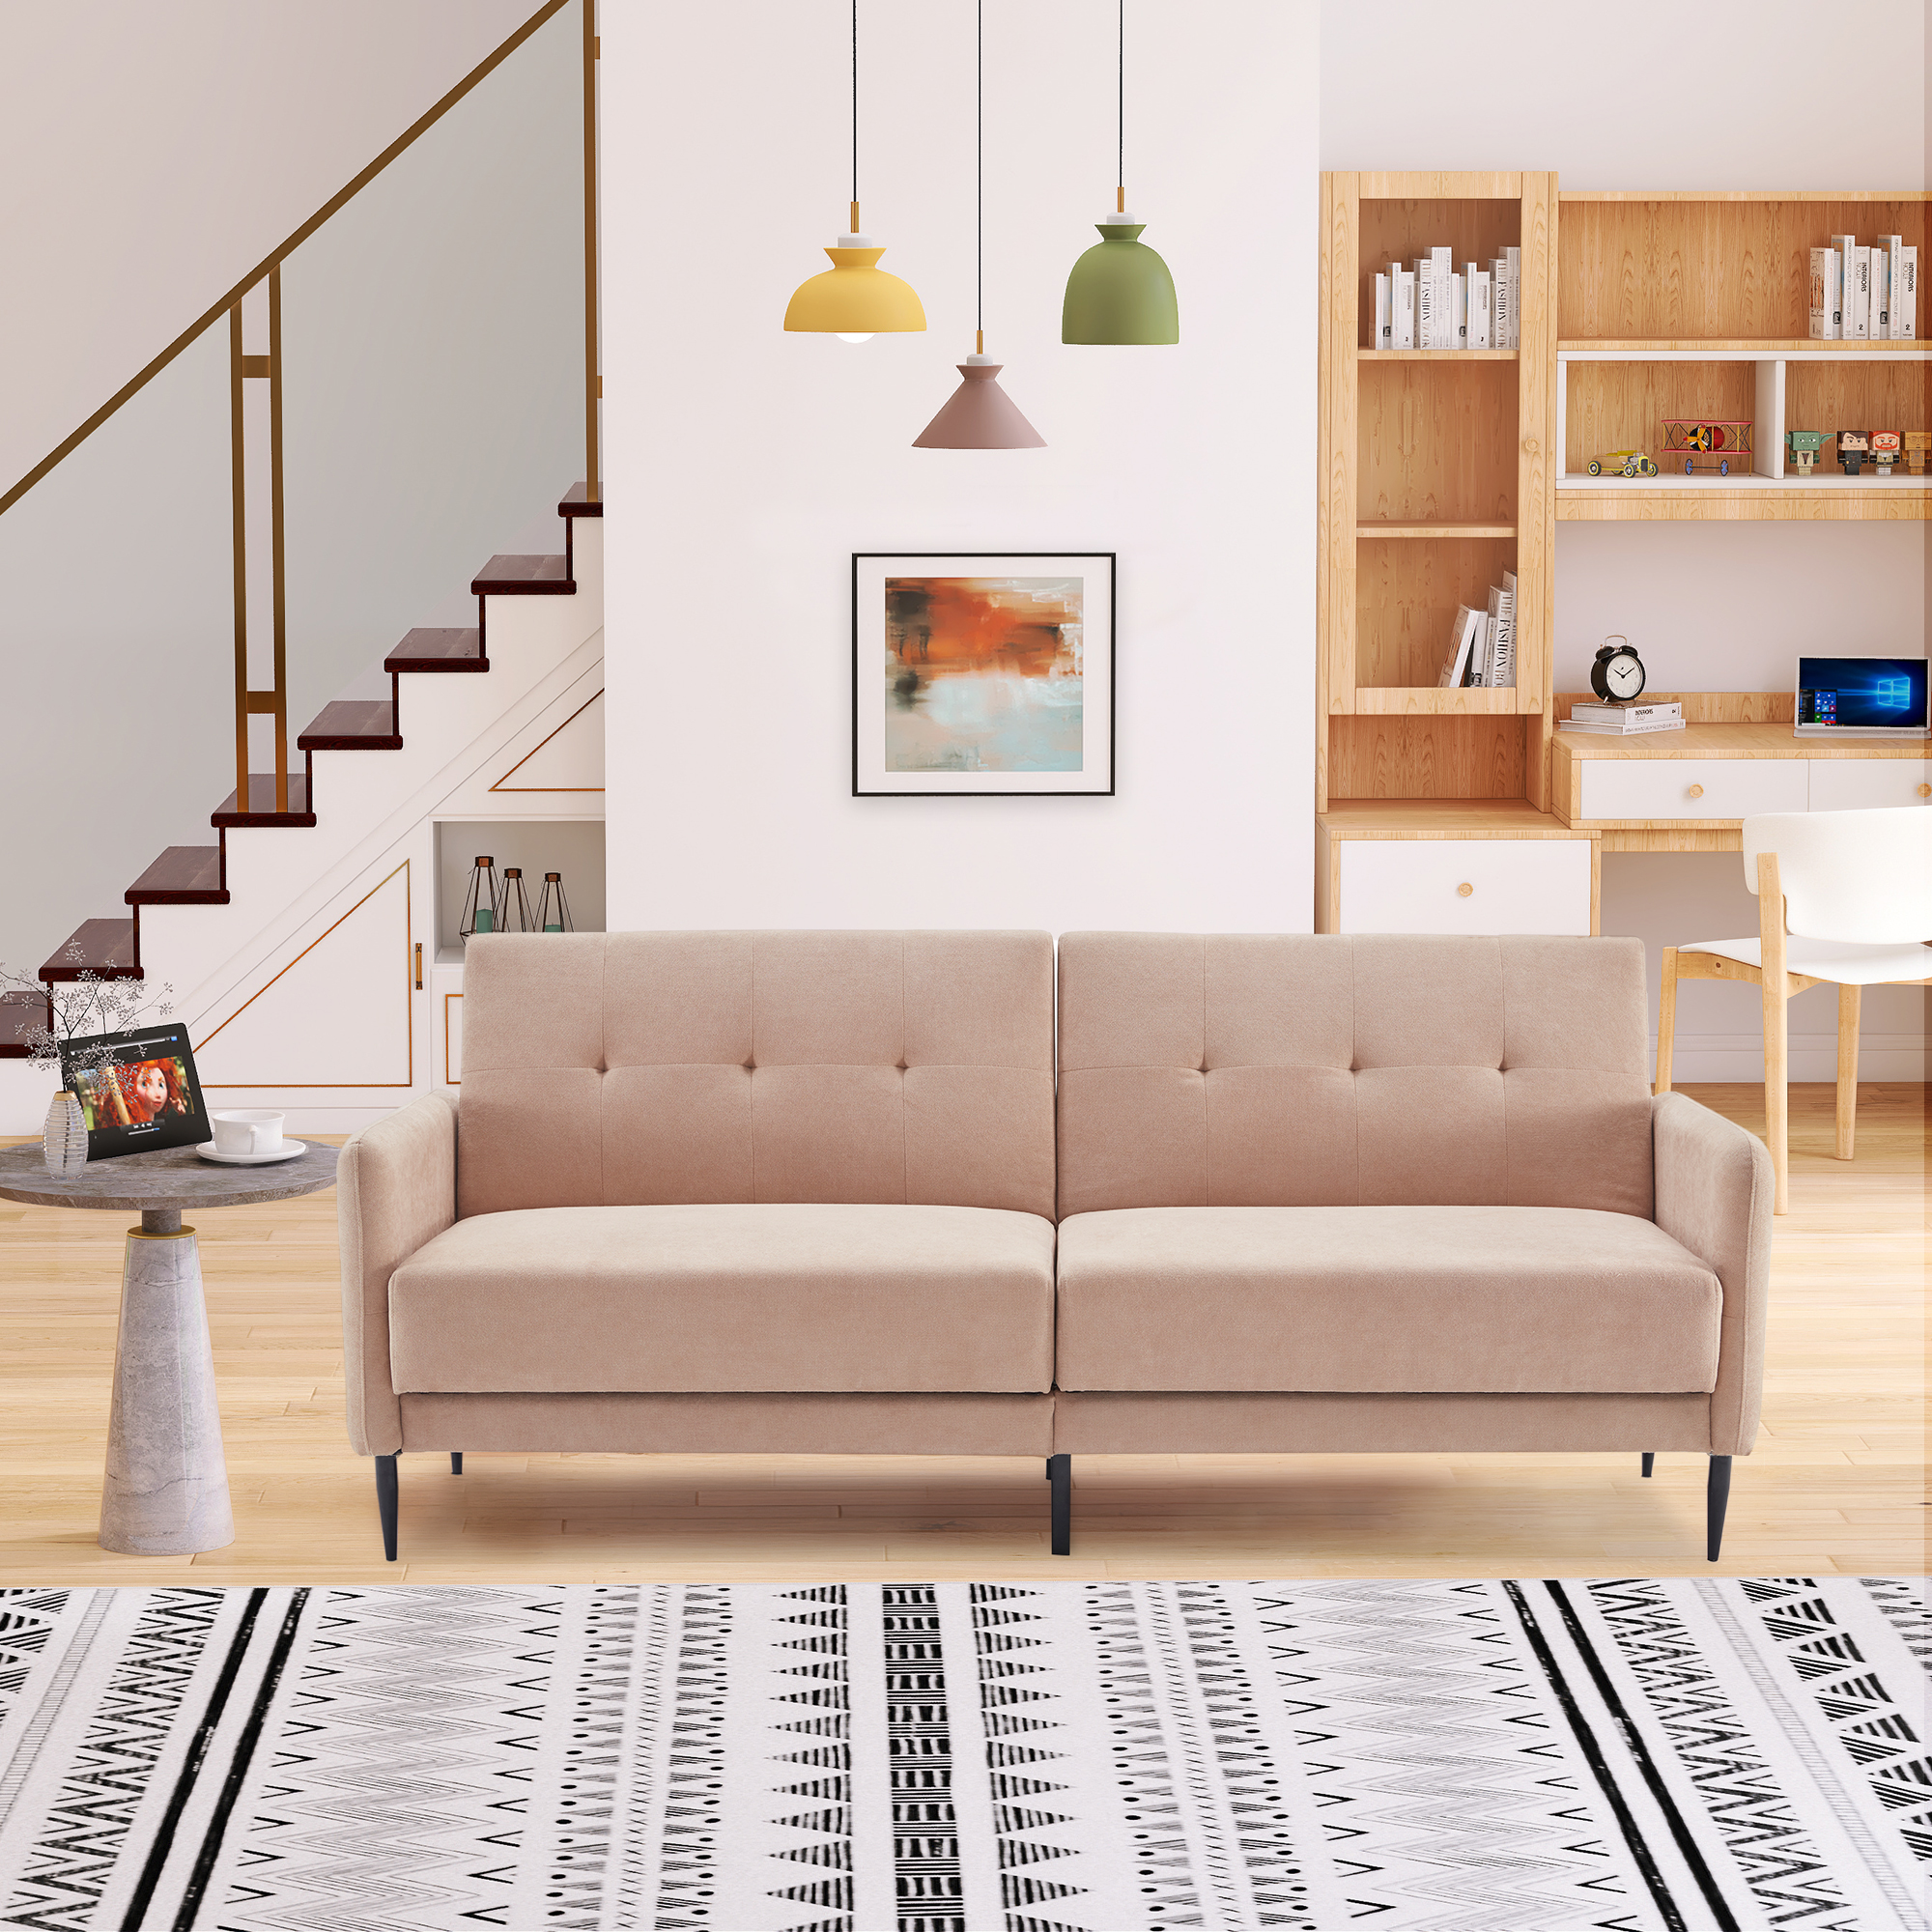 Orisfur. Linen Upholstered Modern Convertible Folding Futon Sofa Bed for Compact Living Space, Apartment, Dorm-Boyel Living